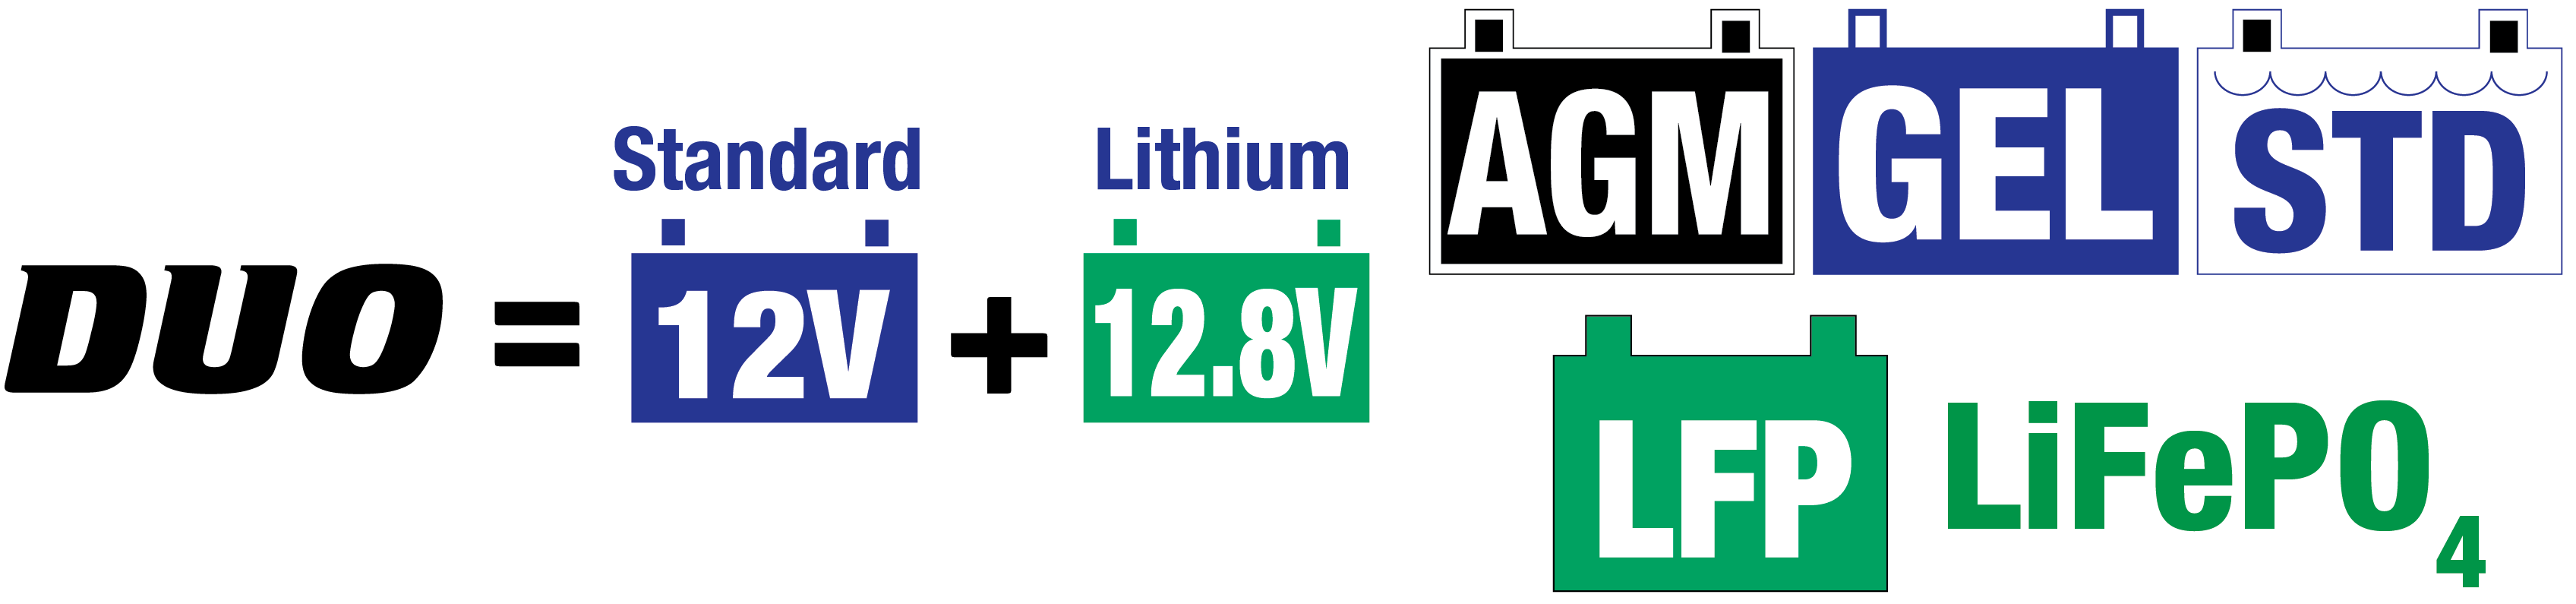 De solar lader is Ideaal voor 12V-loodzuur/12,8V-lithiumaccu’s